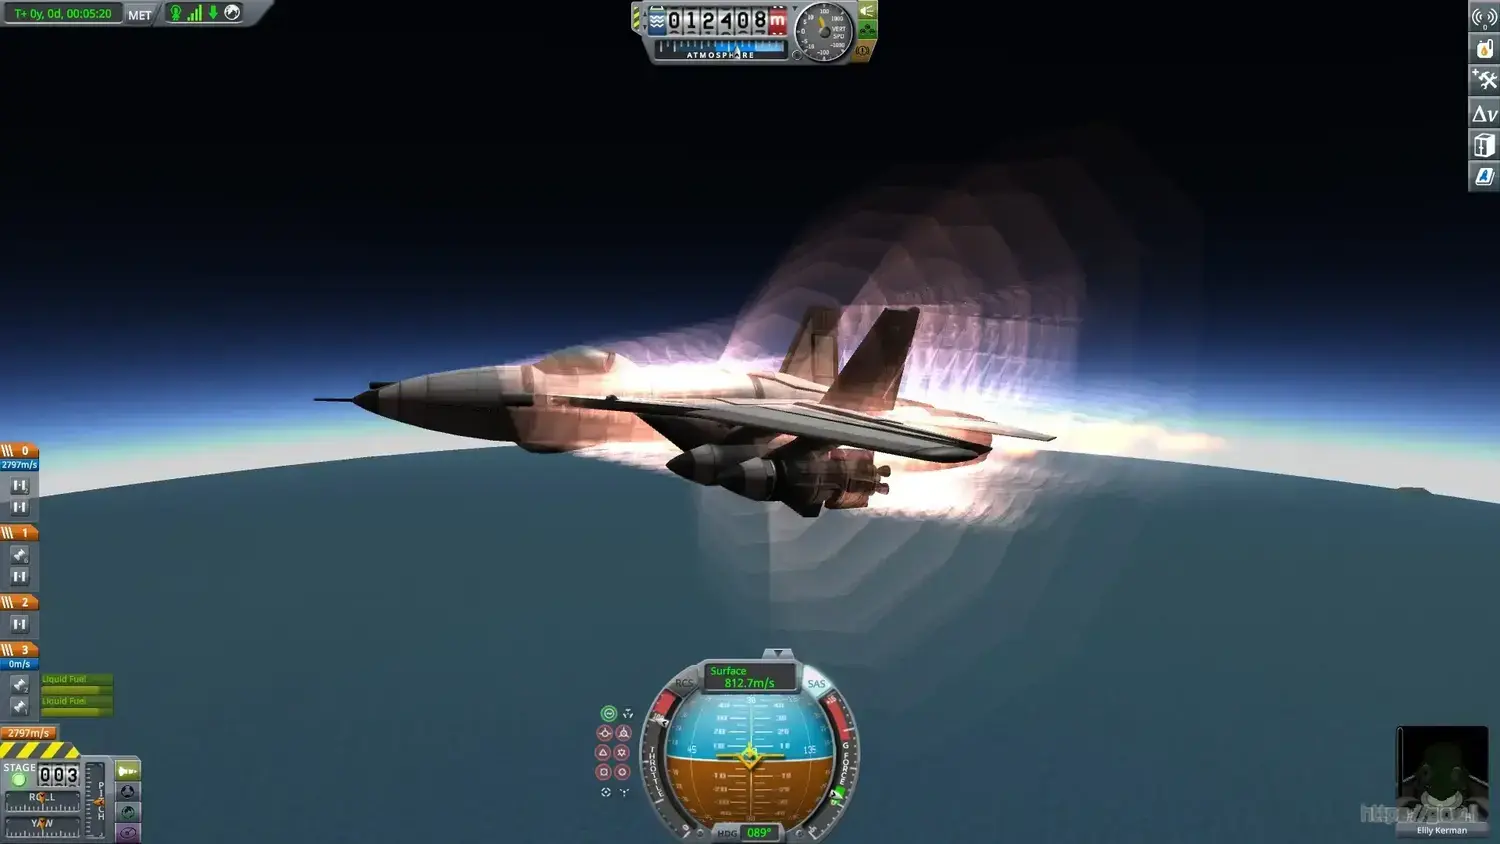 Screenshot of Kerbal Space Program